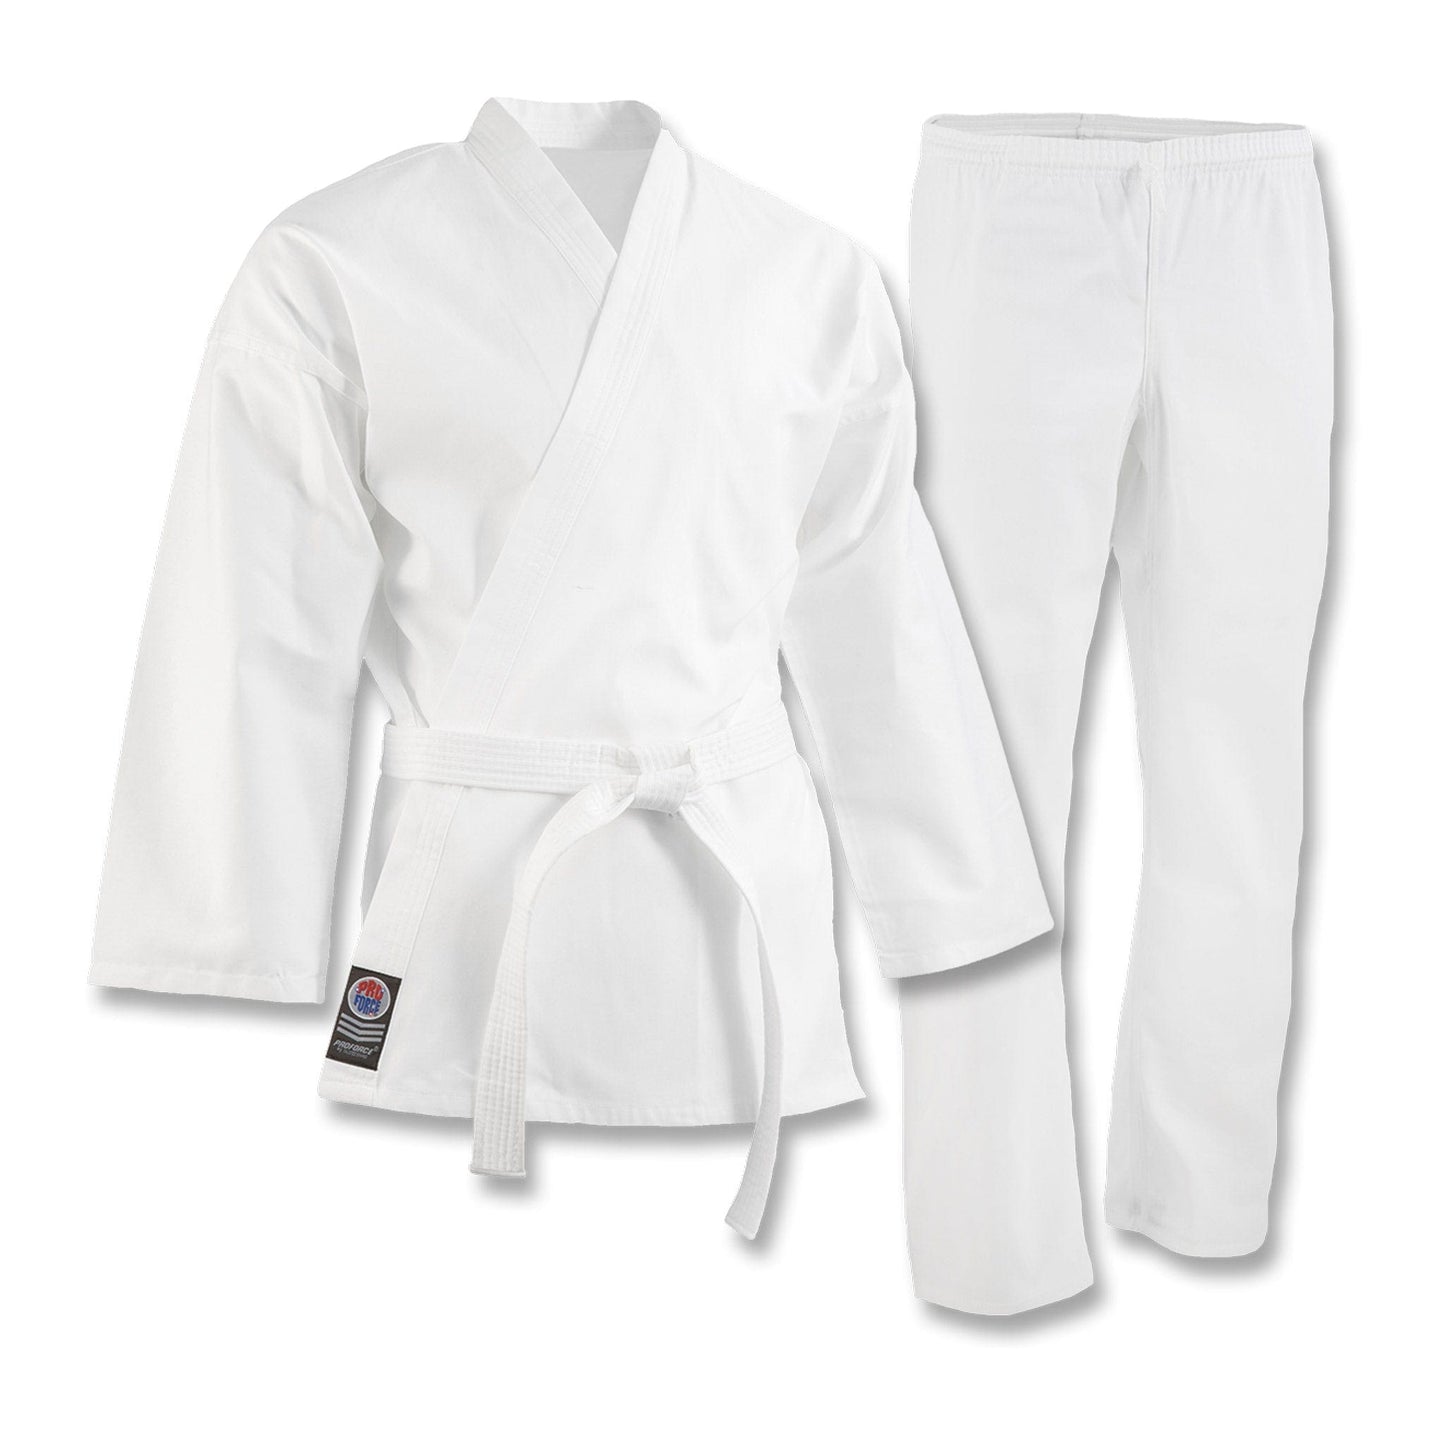 ProForce Karate Uniform ProForce 5 oz Original Karate Uniform Elastic Drawstring Pants - 55/45 Blend